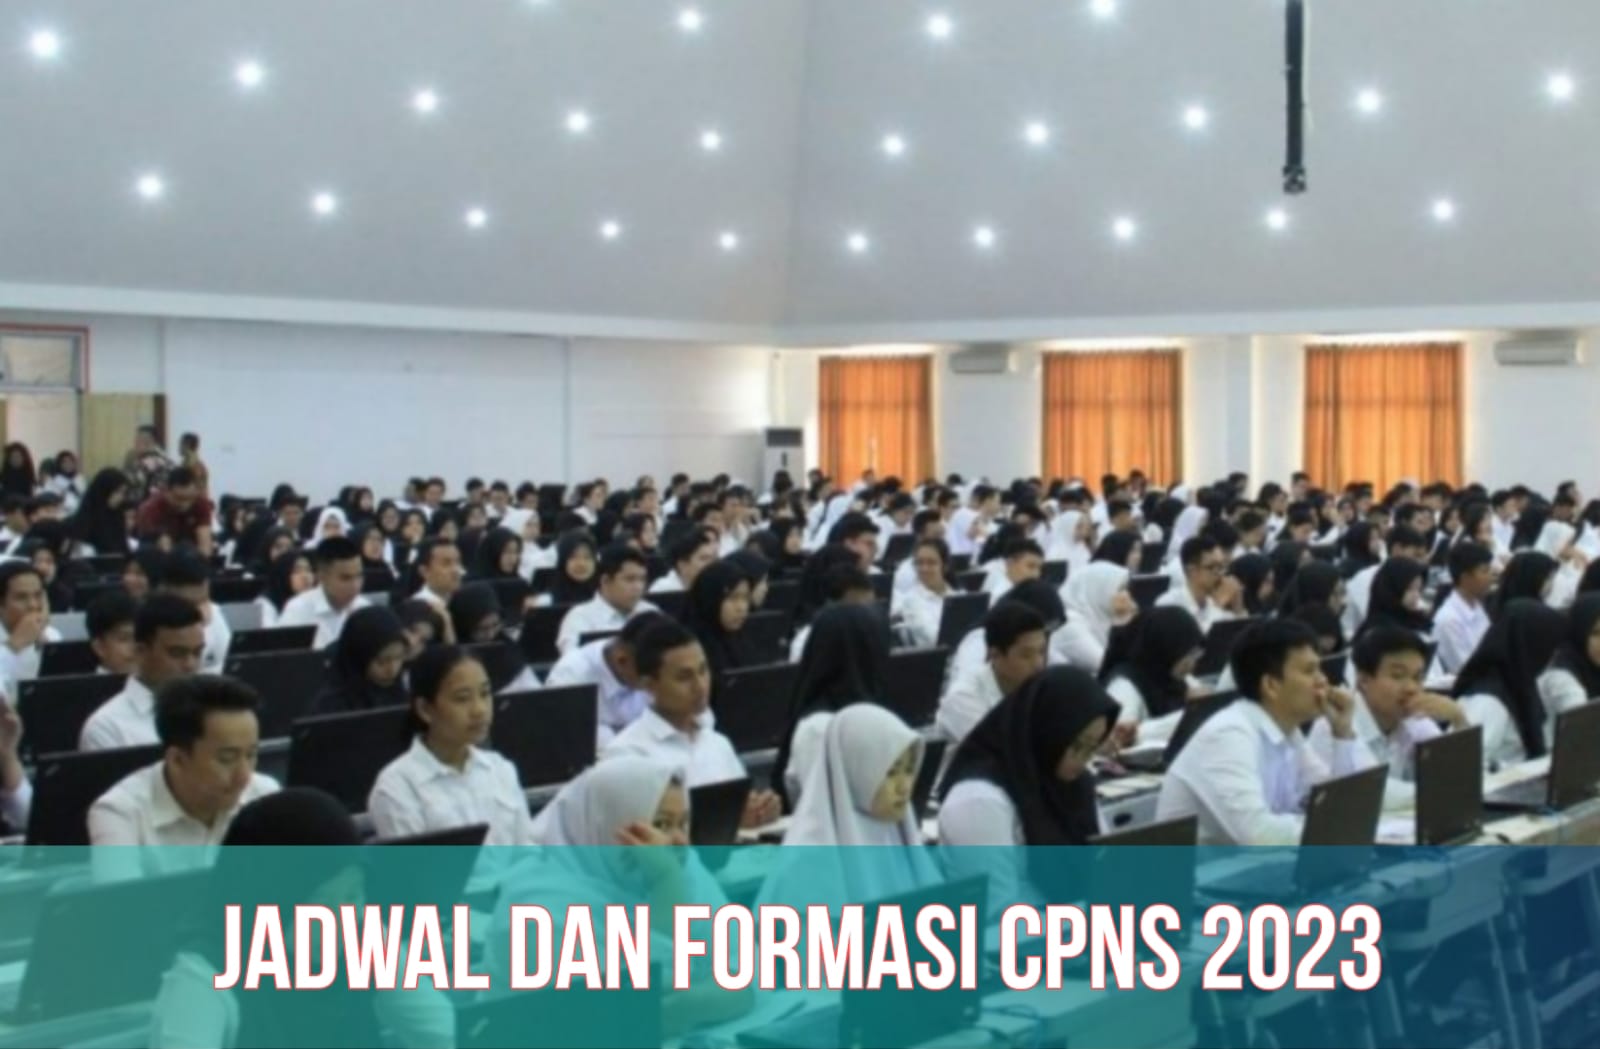 Pendaftaran CPNS 2023 Dibuka Besok! Cek Formasi, Syarat, dan Cara Buat Akun SSCASN, Lengkap dengan Jadwalnya